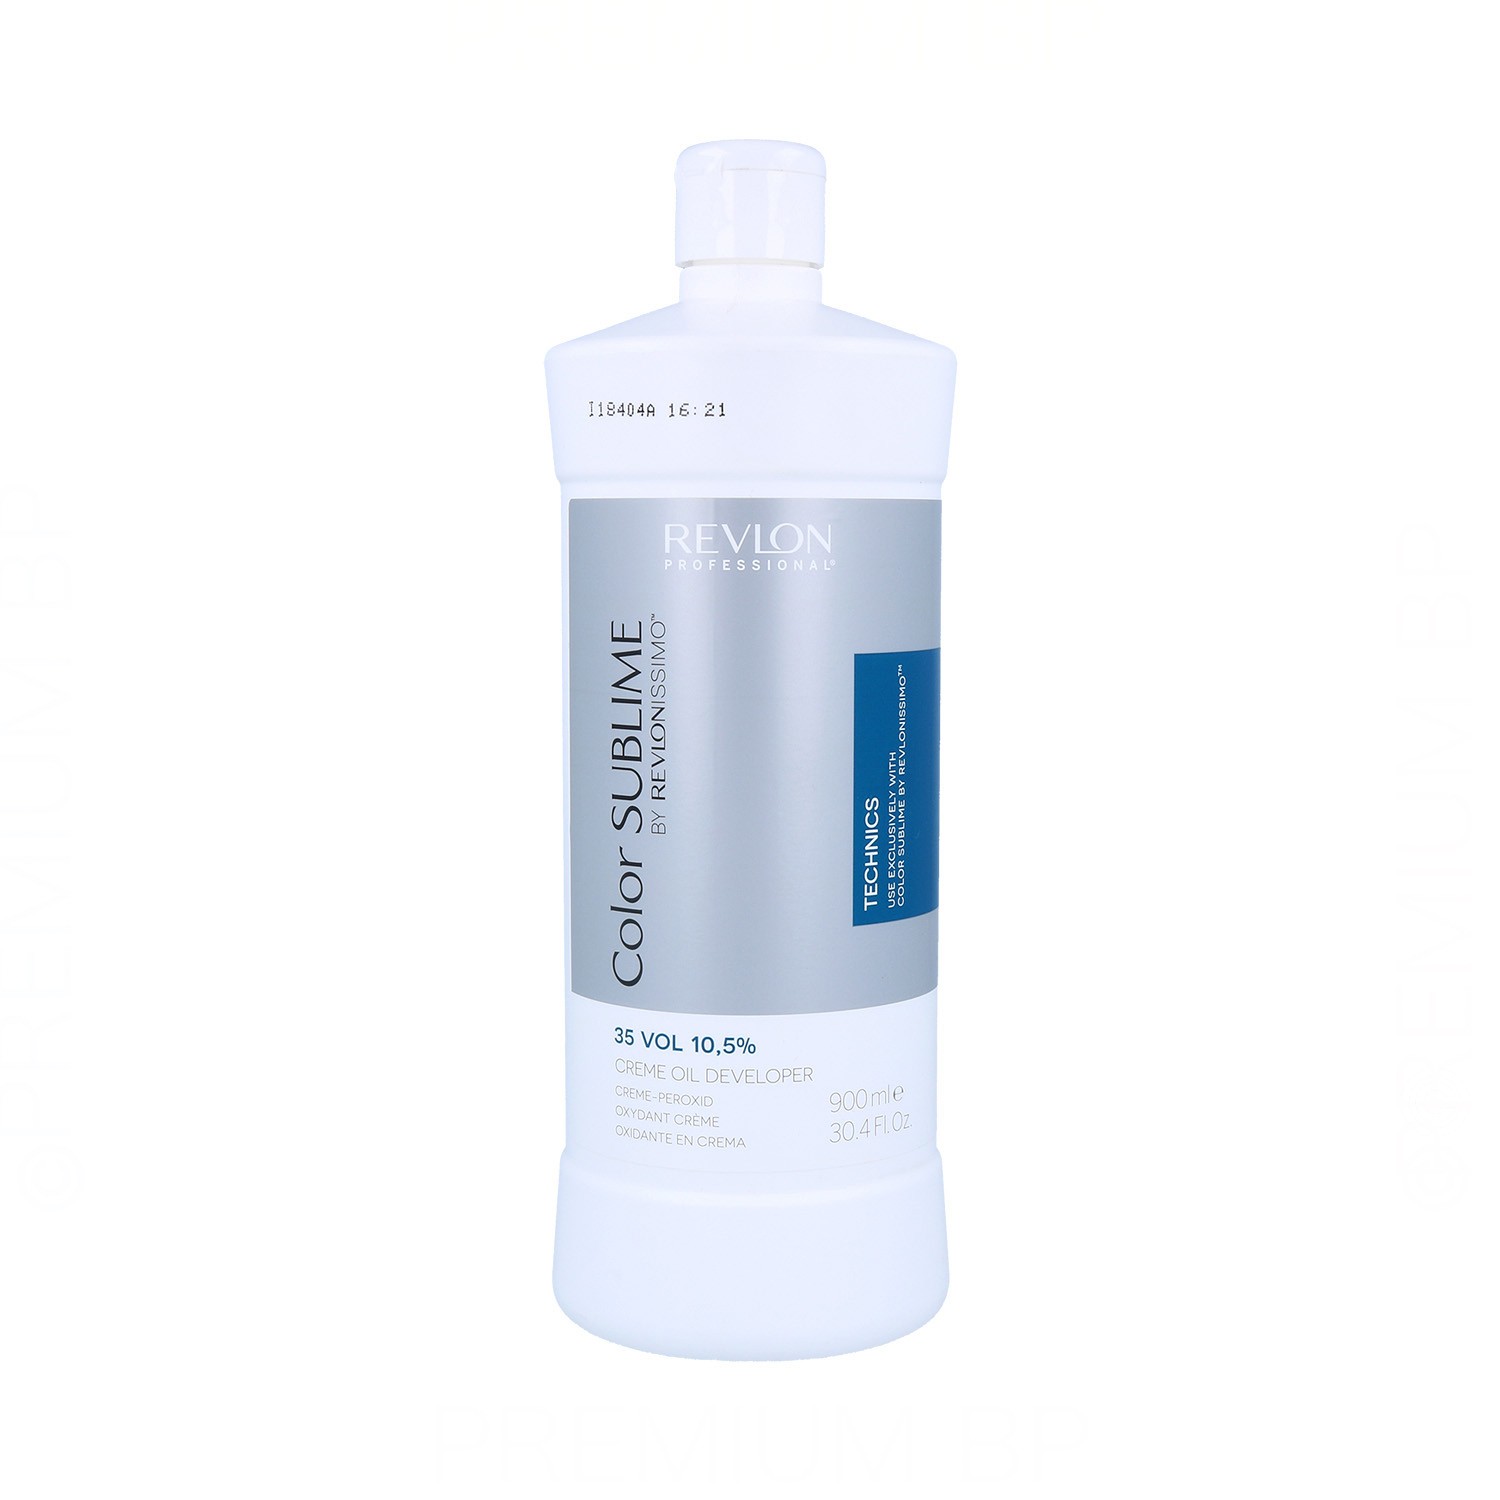 Revlonissimo Color Sublime Cream Oil Oxidante 35Vol (10.5%) 900 ml